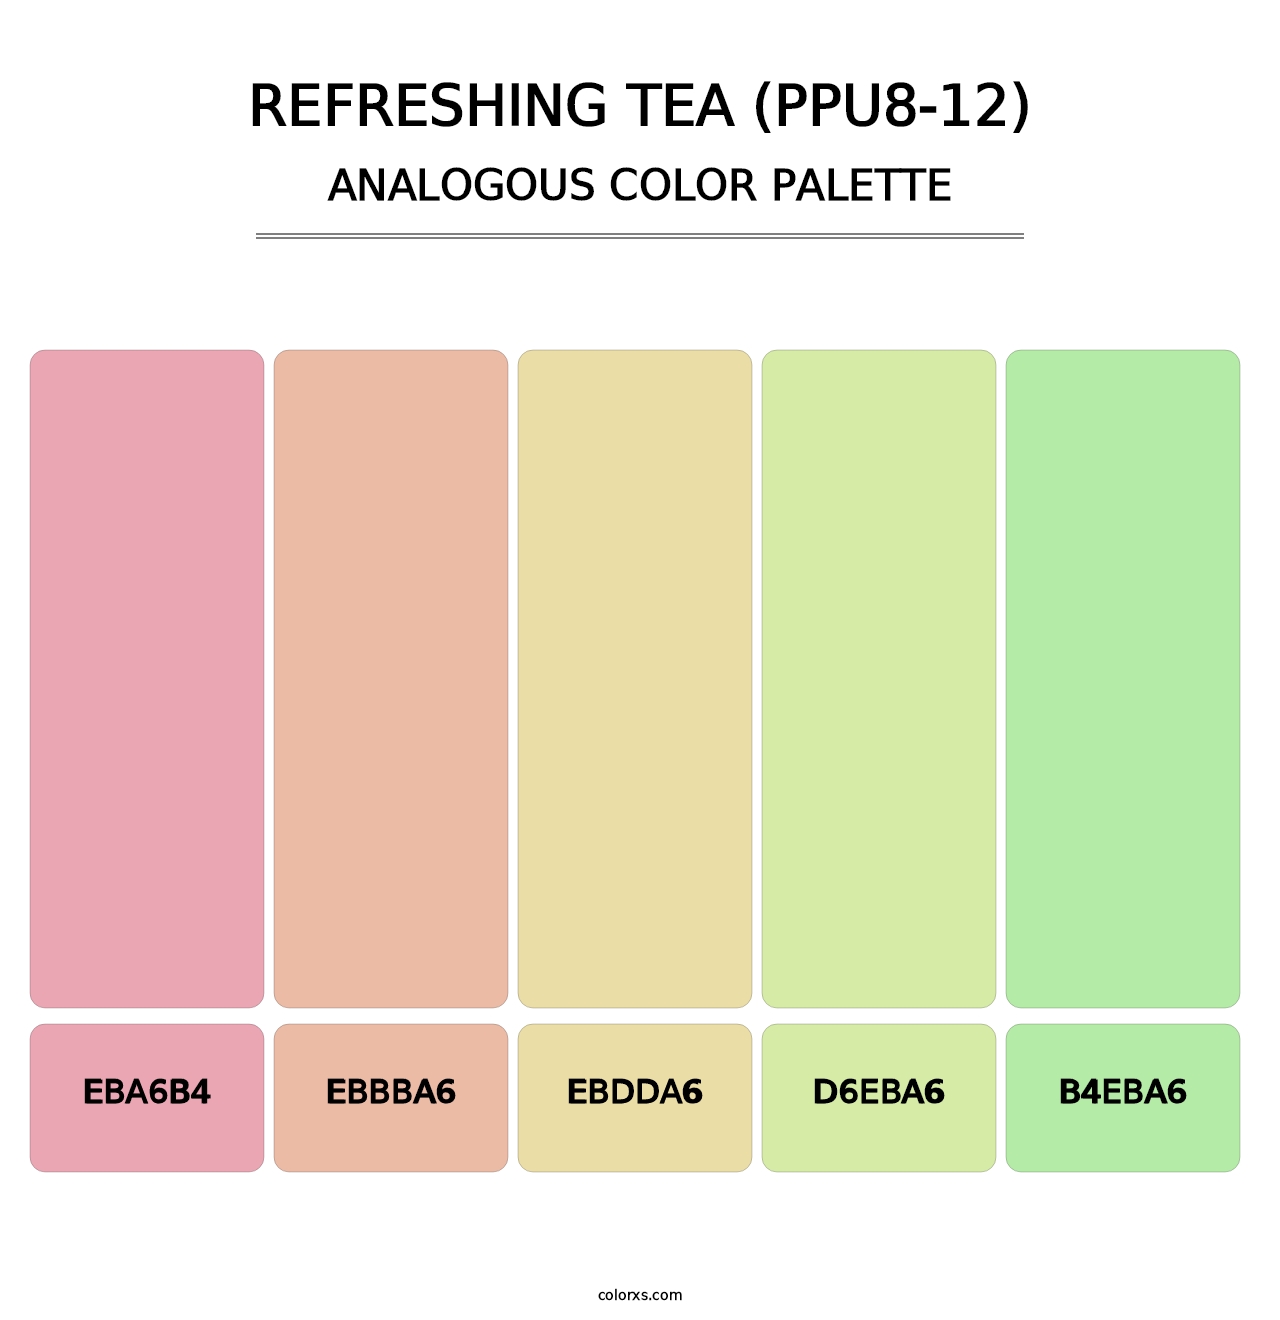 Refreshing Tea (PPU8-12) - Analogous Color Palette